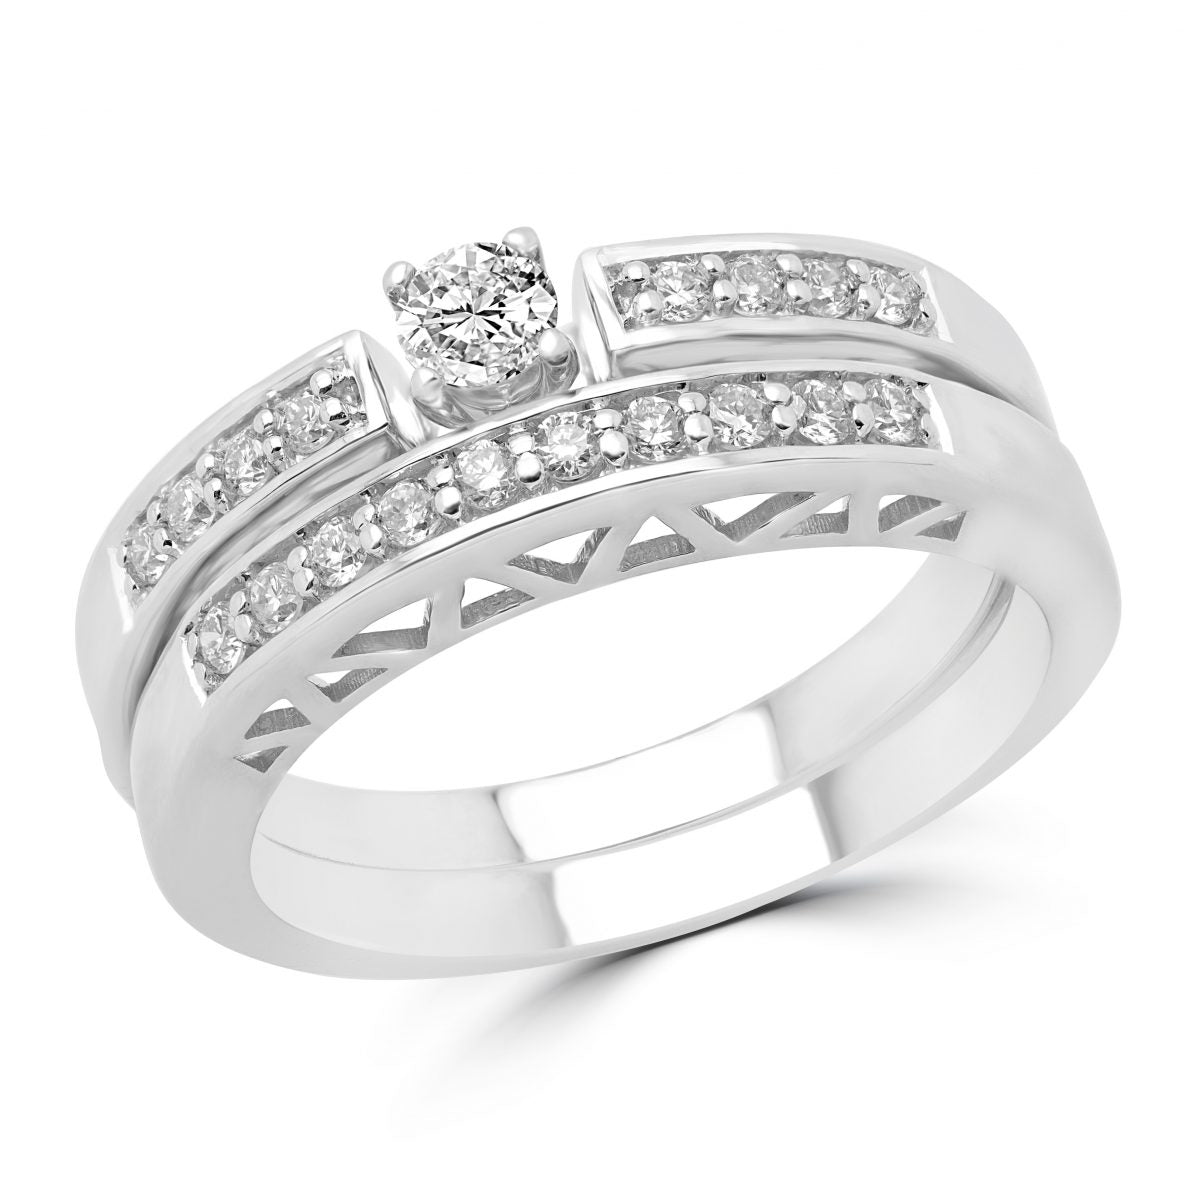 Engagement ring & wedding band bridal set 0.32 (ctw) in 14k gold